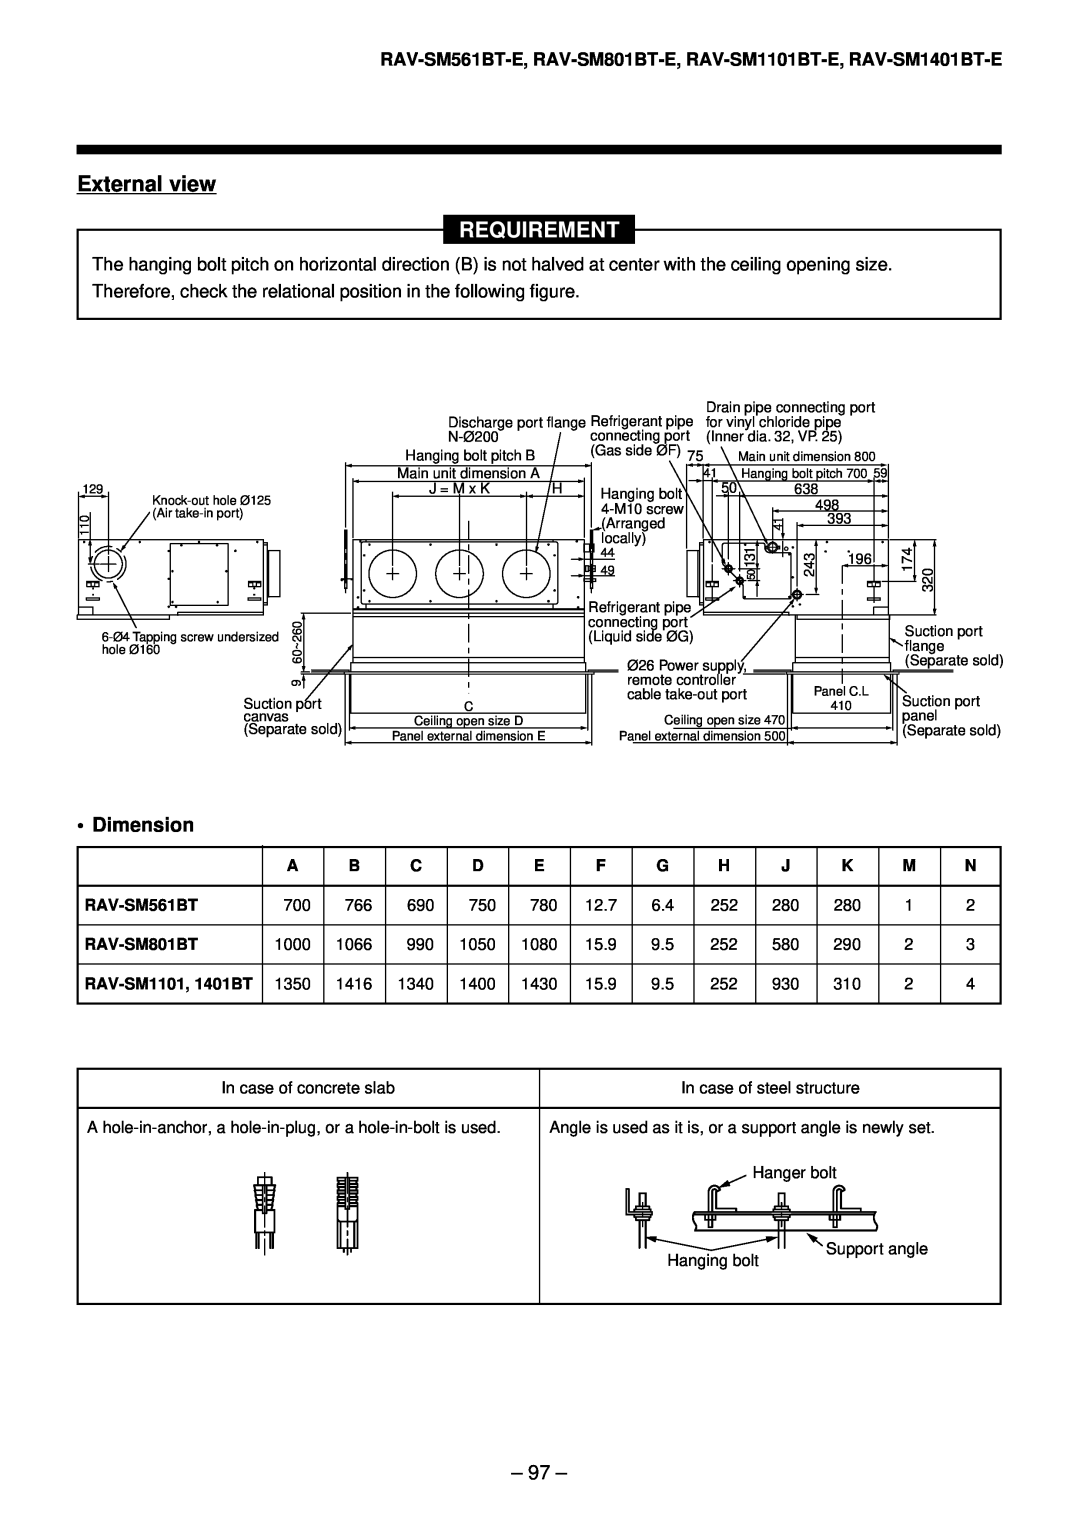 Toshiba RAV-SM1401AT-E External view, Requirement, Dimension, RAV-SM561BT-E, RAV-SM801BT-E, RAV-SM1101BT-E, RAV-SM1401BT-E 